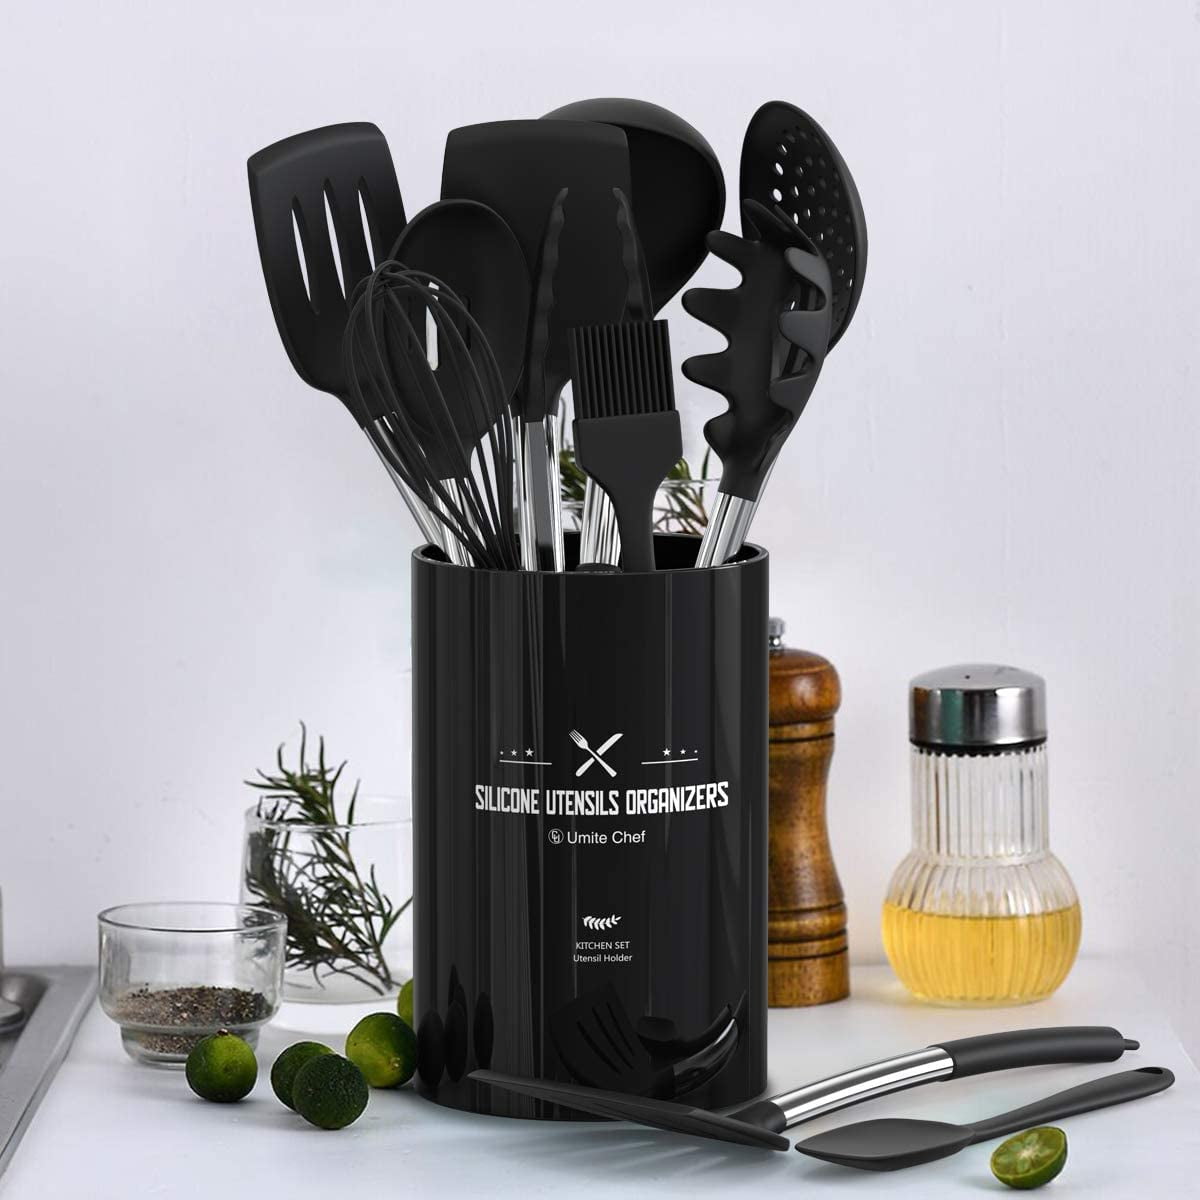 utosday cooking utensils set, 33pcs silicone kitchen utensils set with  holder, heat resistant non-stick silicone, dishwasher safe coo